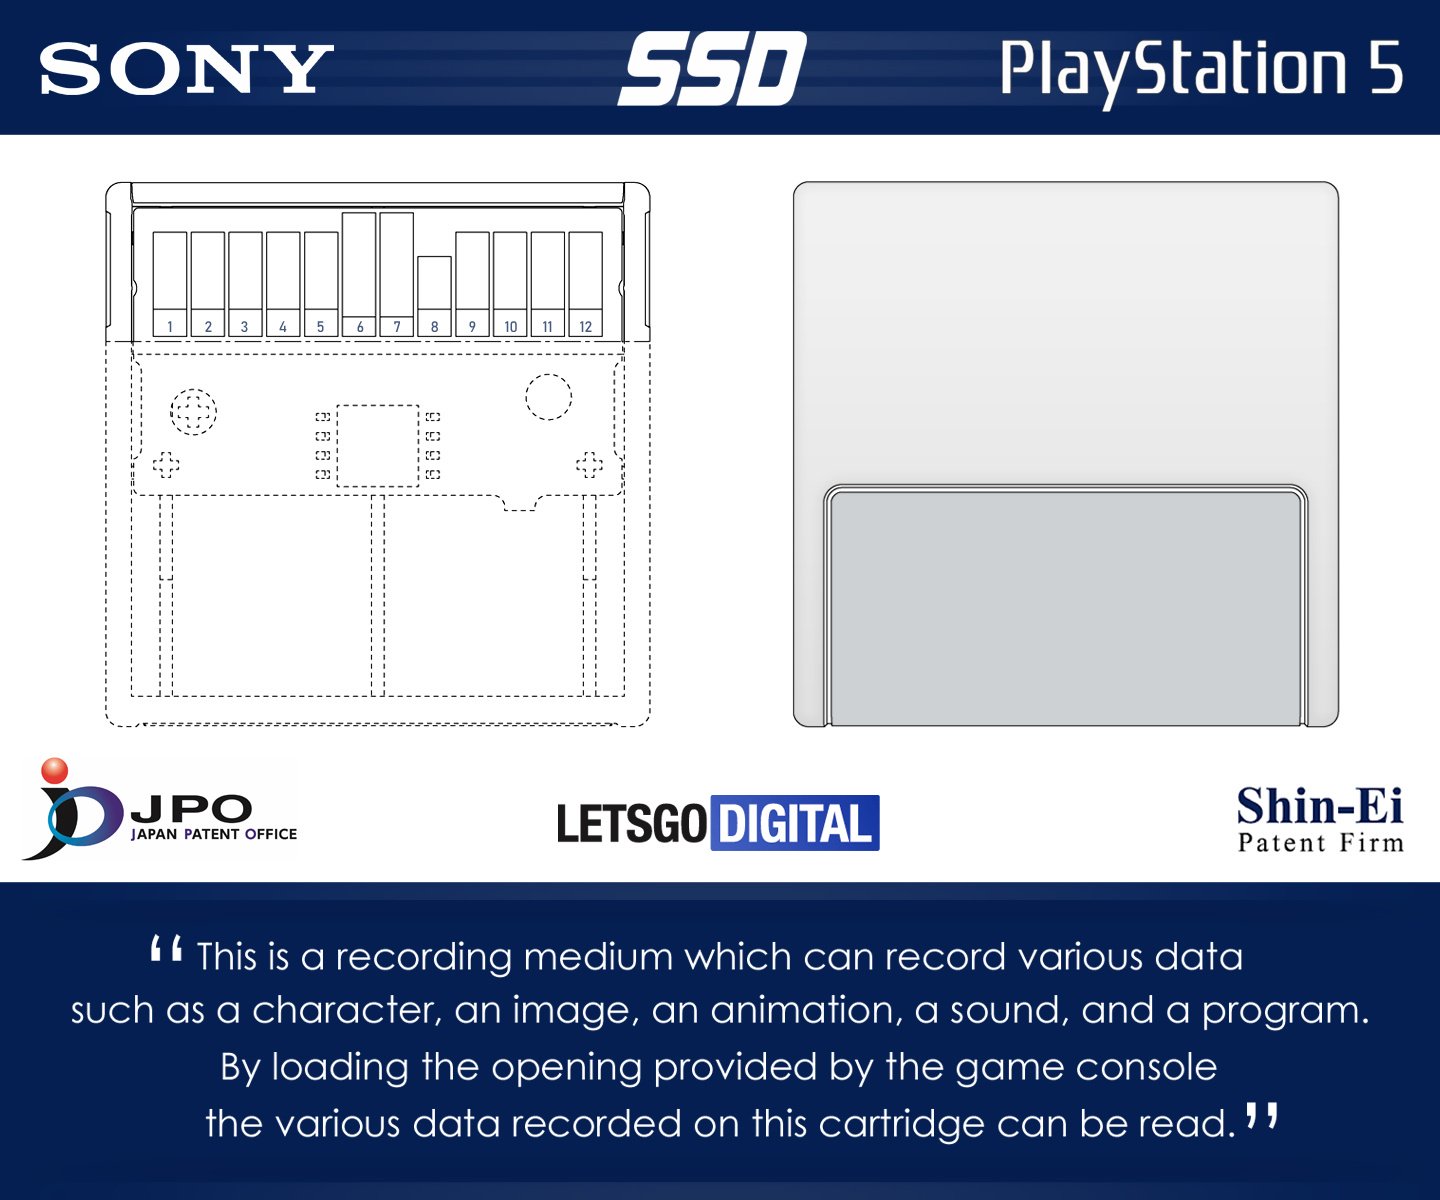 PlayStation 5 PS5 SSD-Speicherkassetten Japan Patent Image